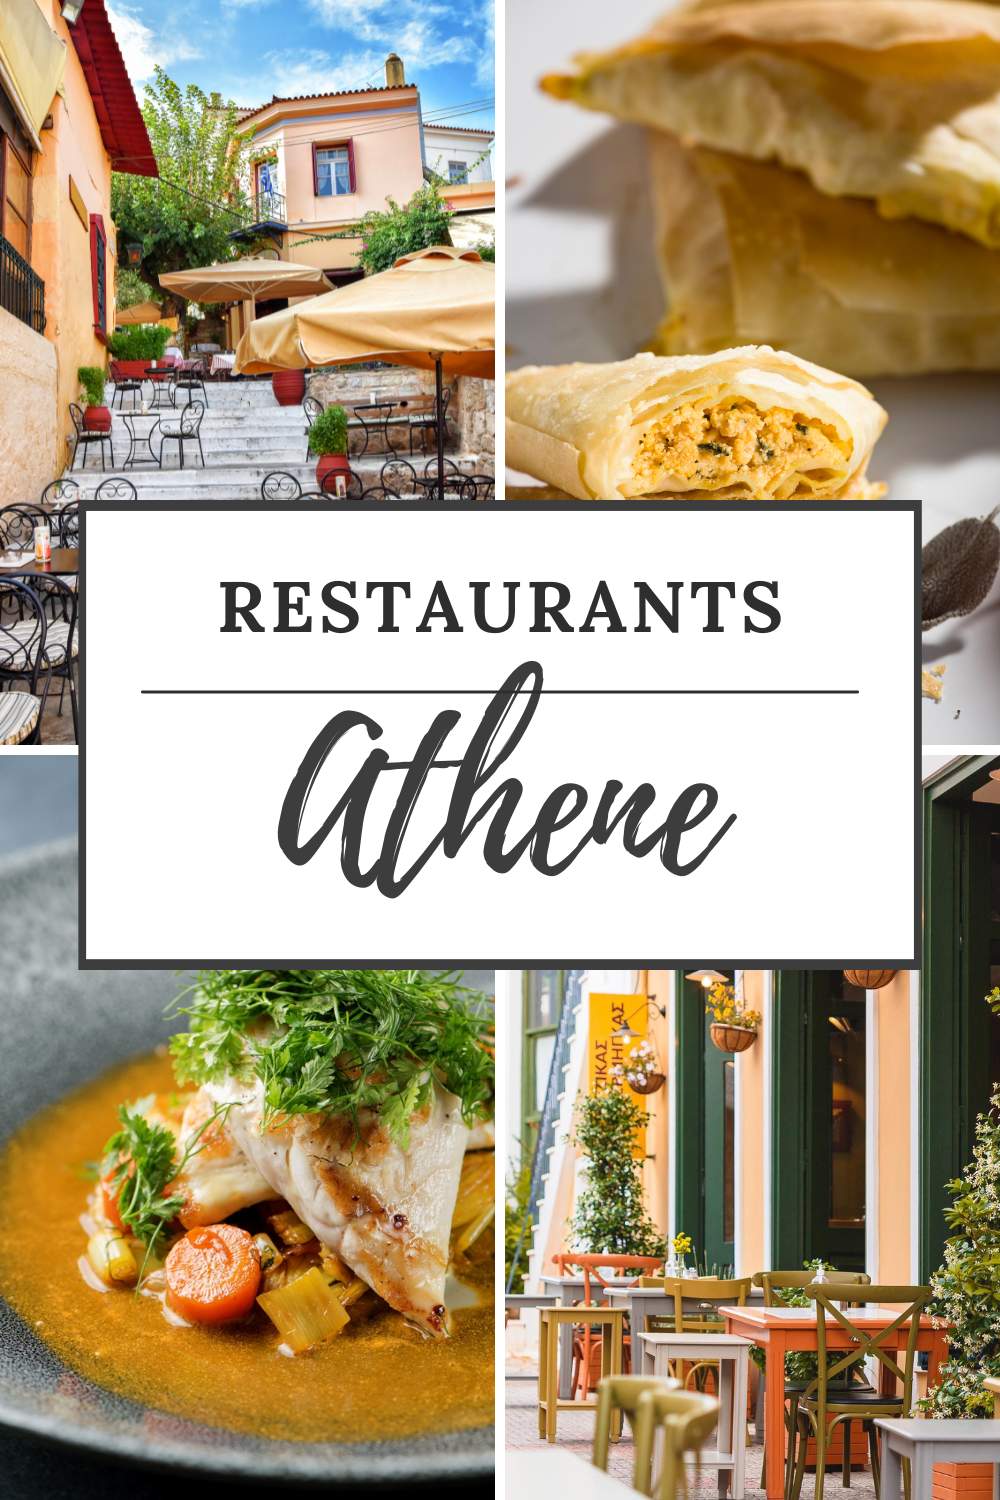 Restaurants Athene: uit eten in Athene? Ontdek de leukste restaurants in Athene | Mooistestedentrips.nl